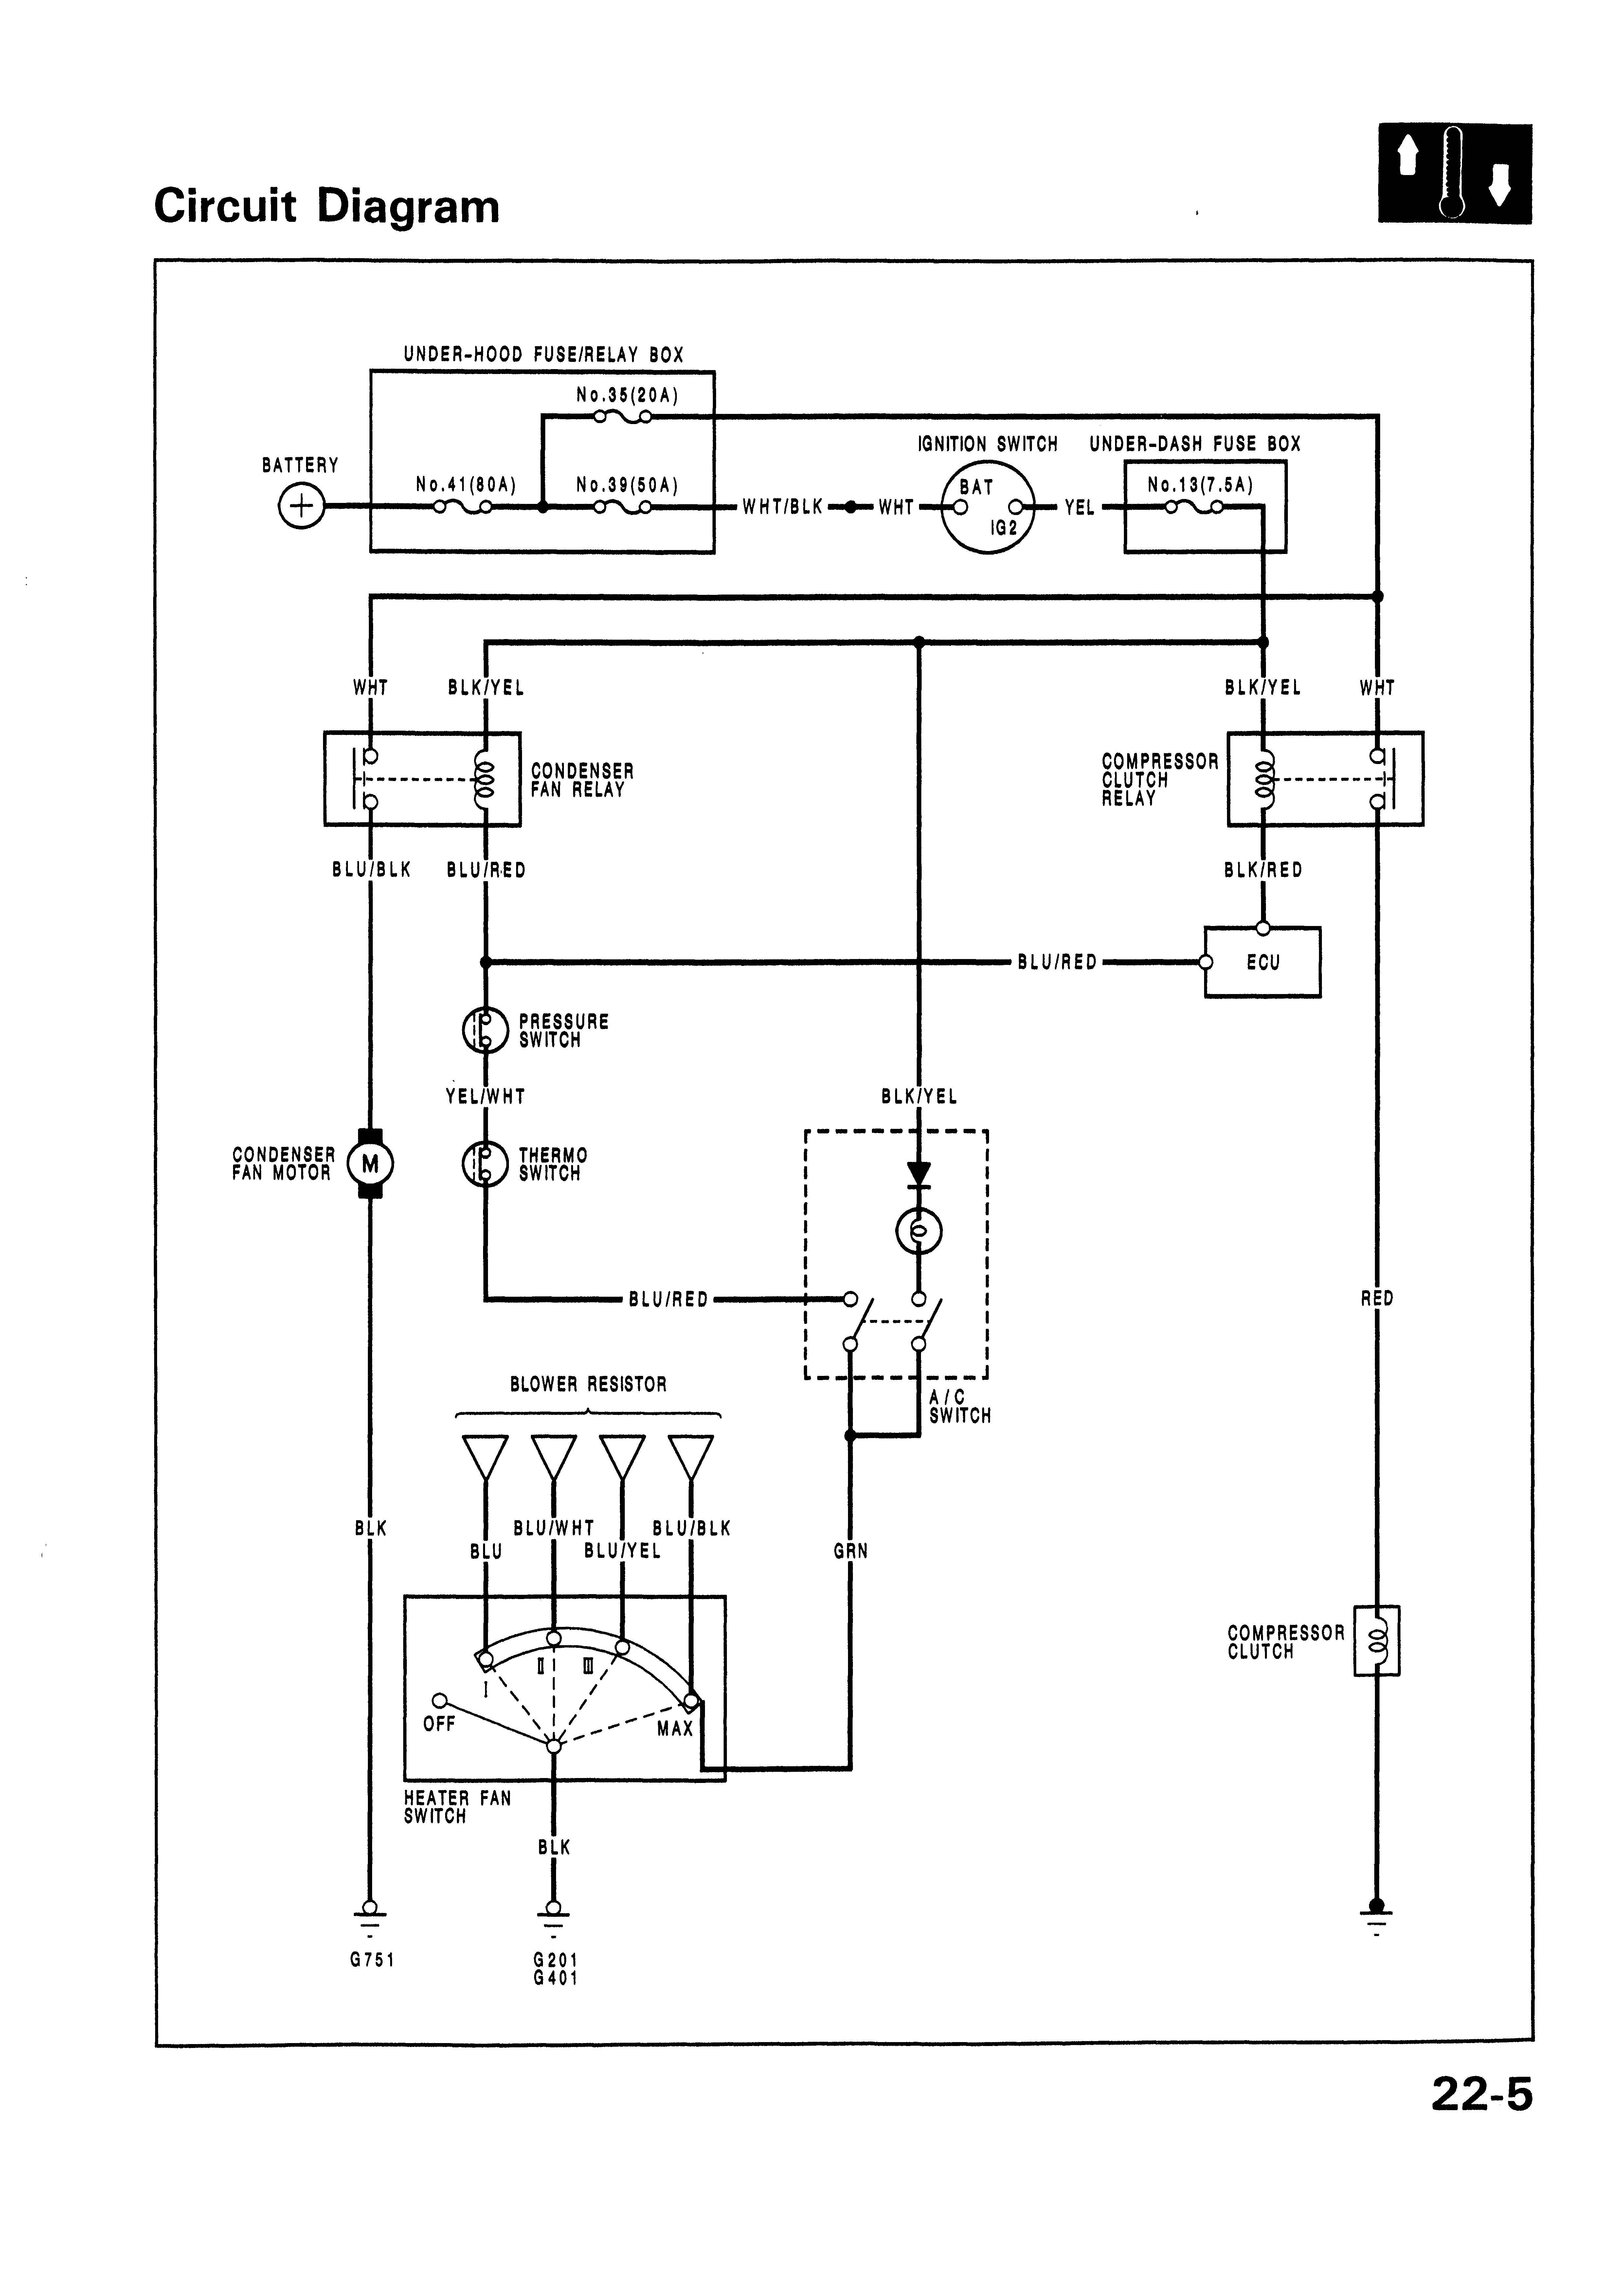 Inverter Pressor Wiring Diagram New Wiring Diagram 10 Ex Les Ac